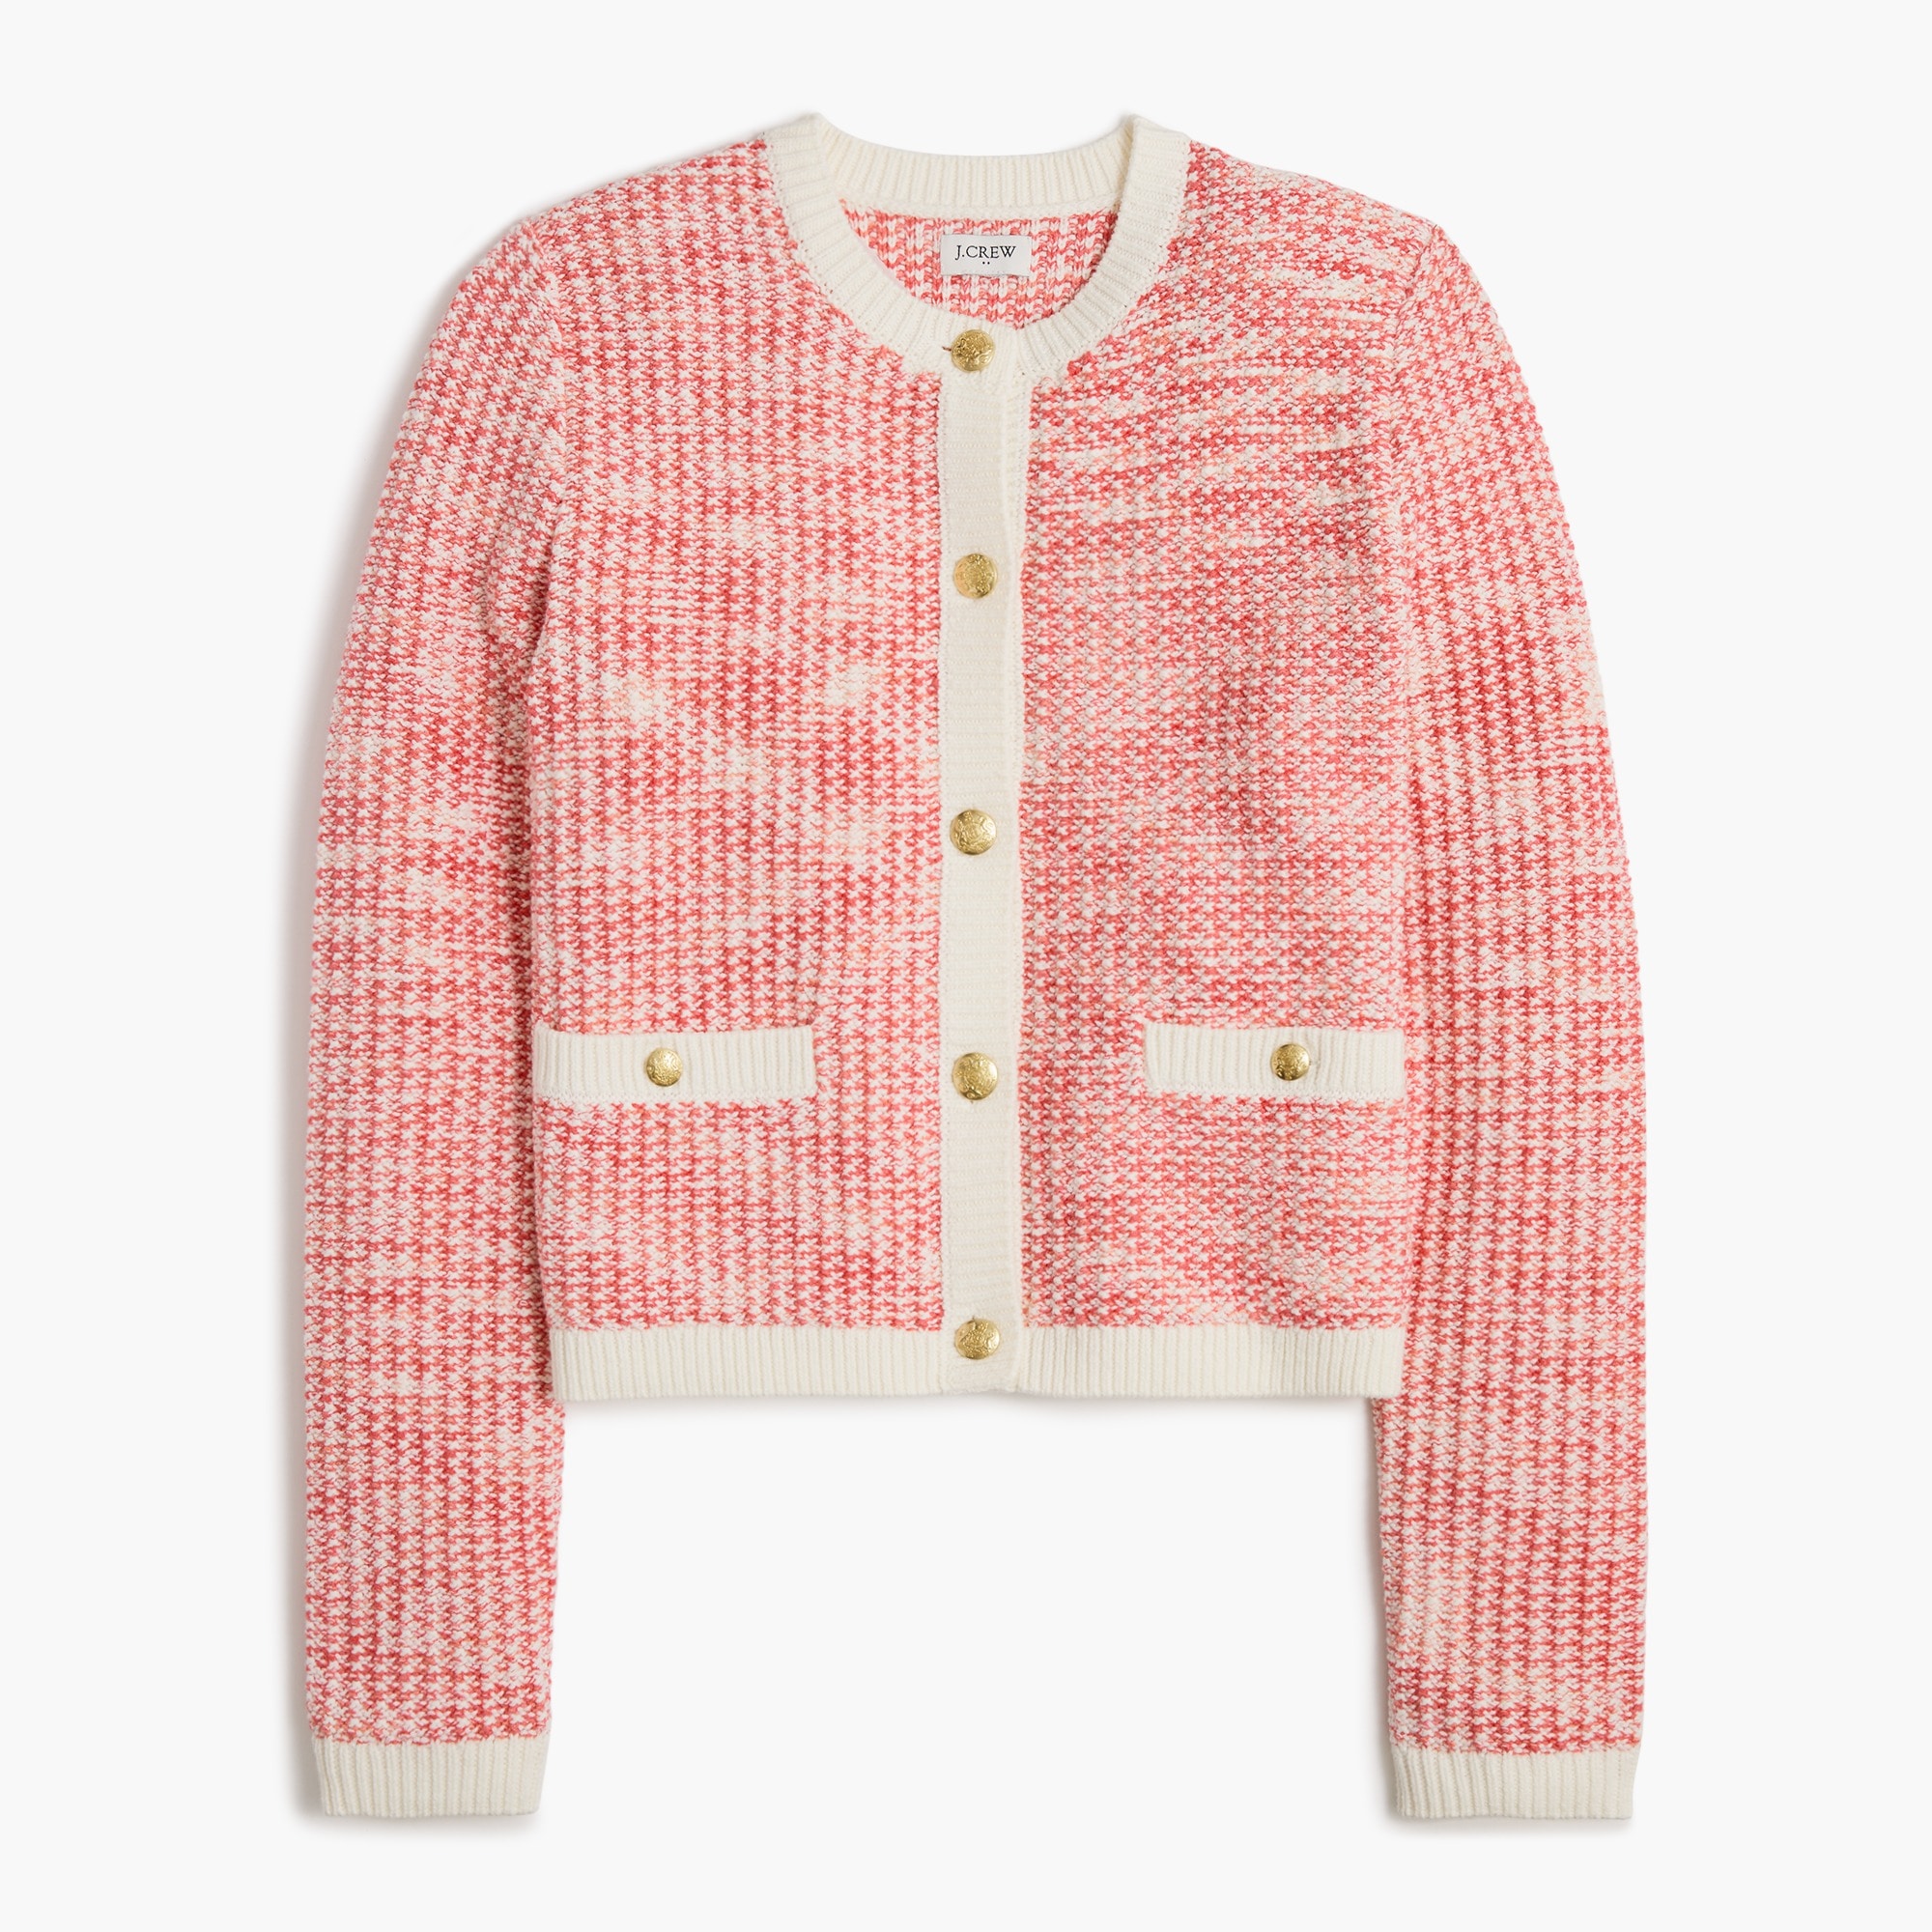 Popcorn-stitch lady jacket cardigan sweater